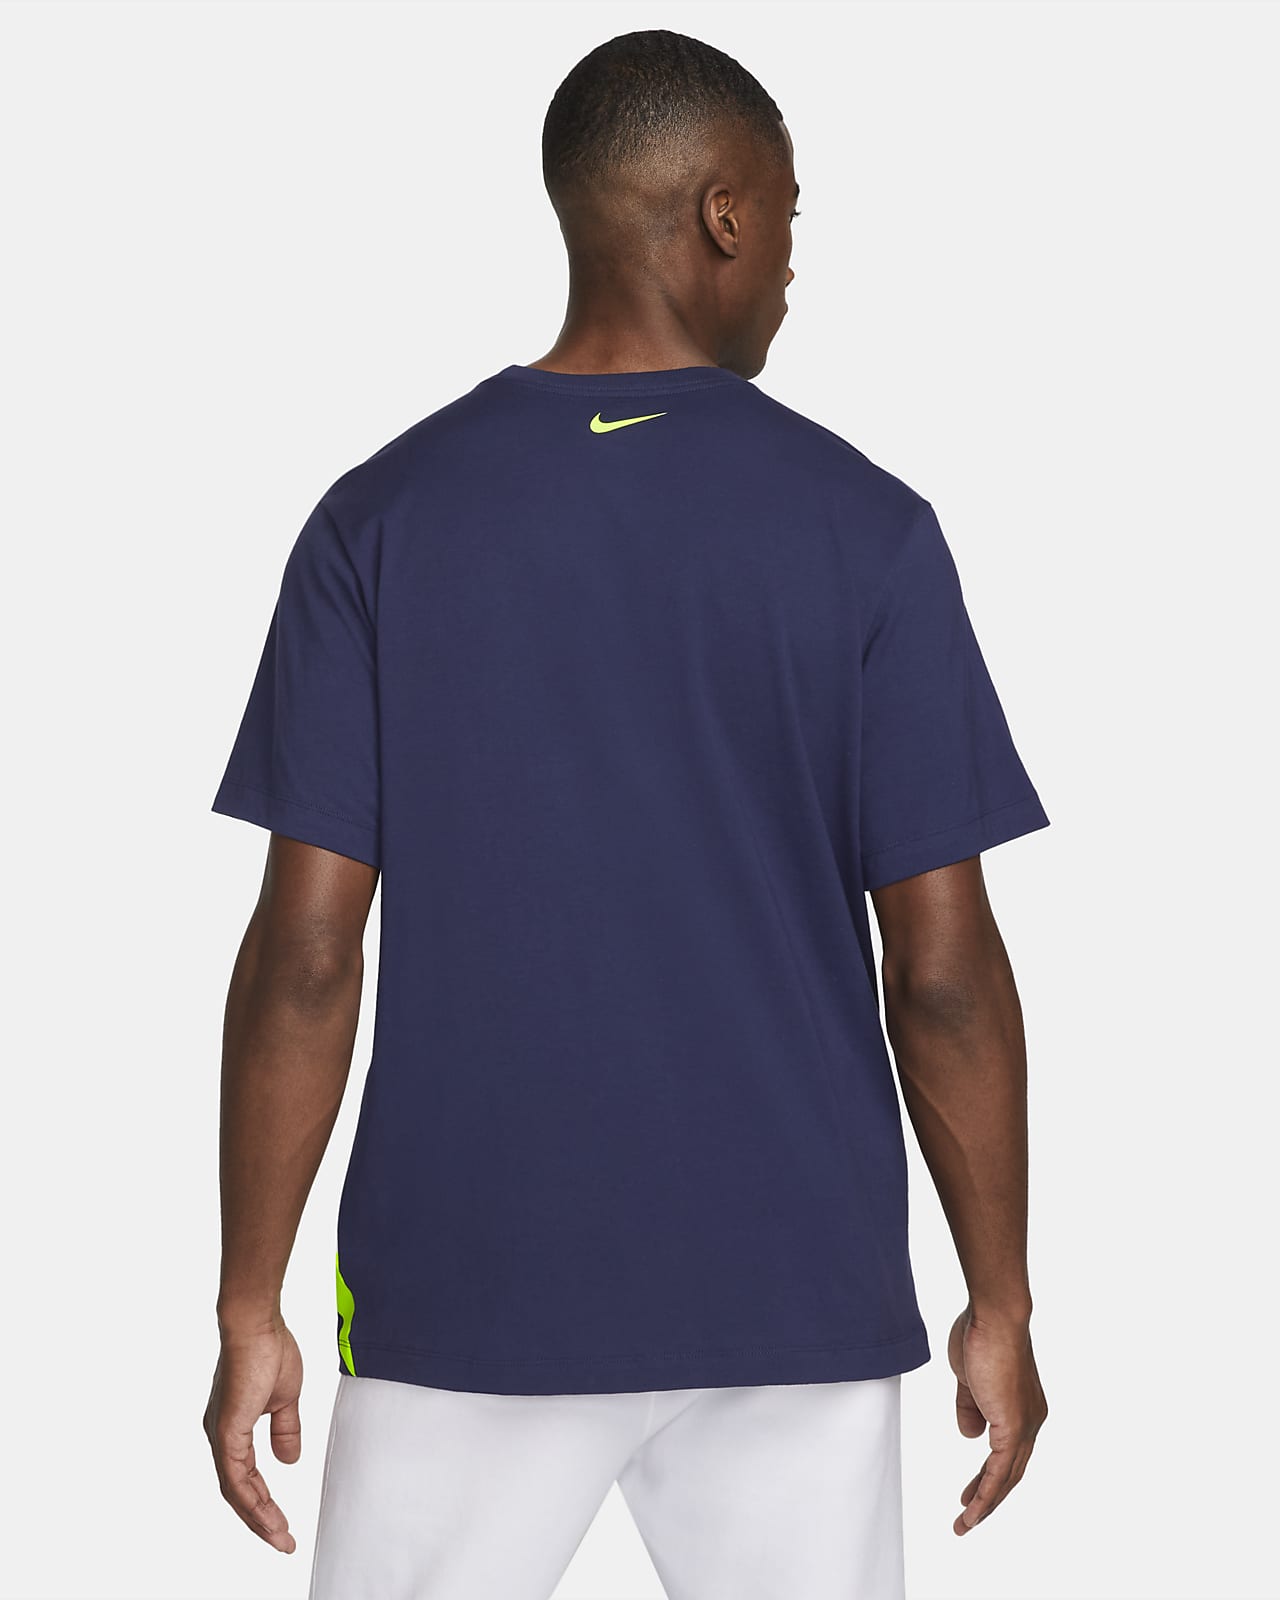 Tottenham Hotspur NFL Nike Limited Jersey - White / Binary Blue